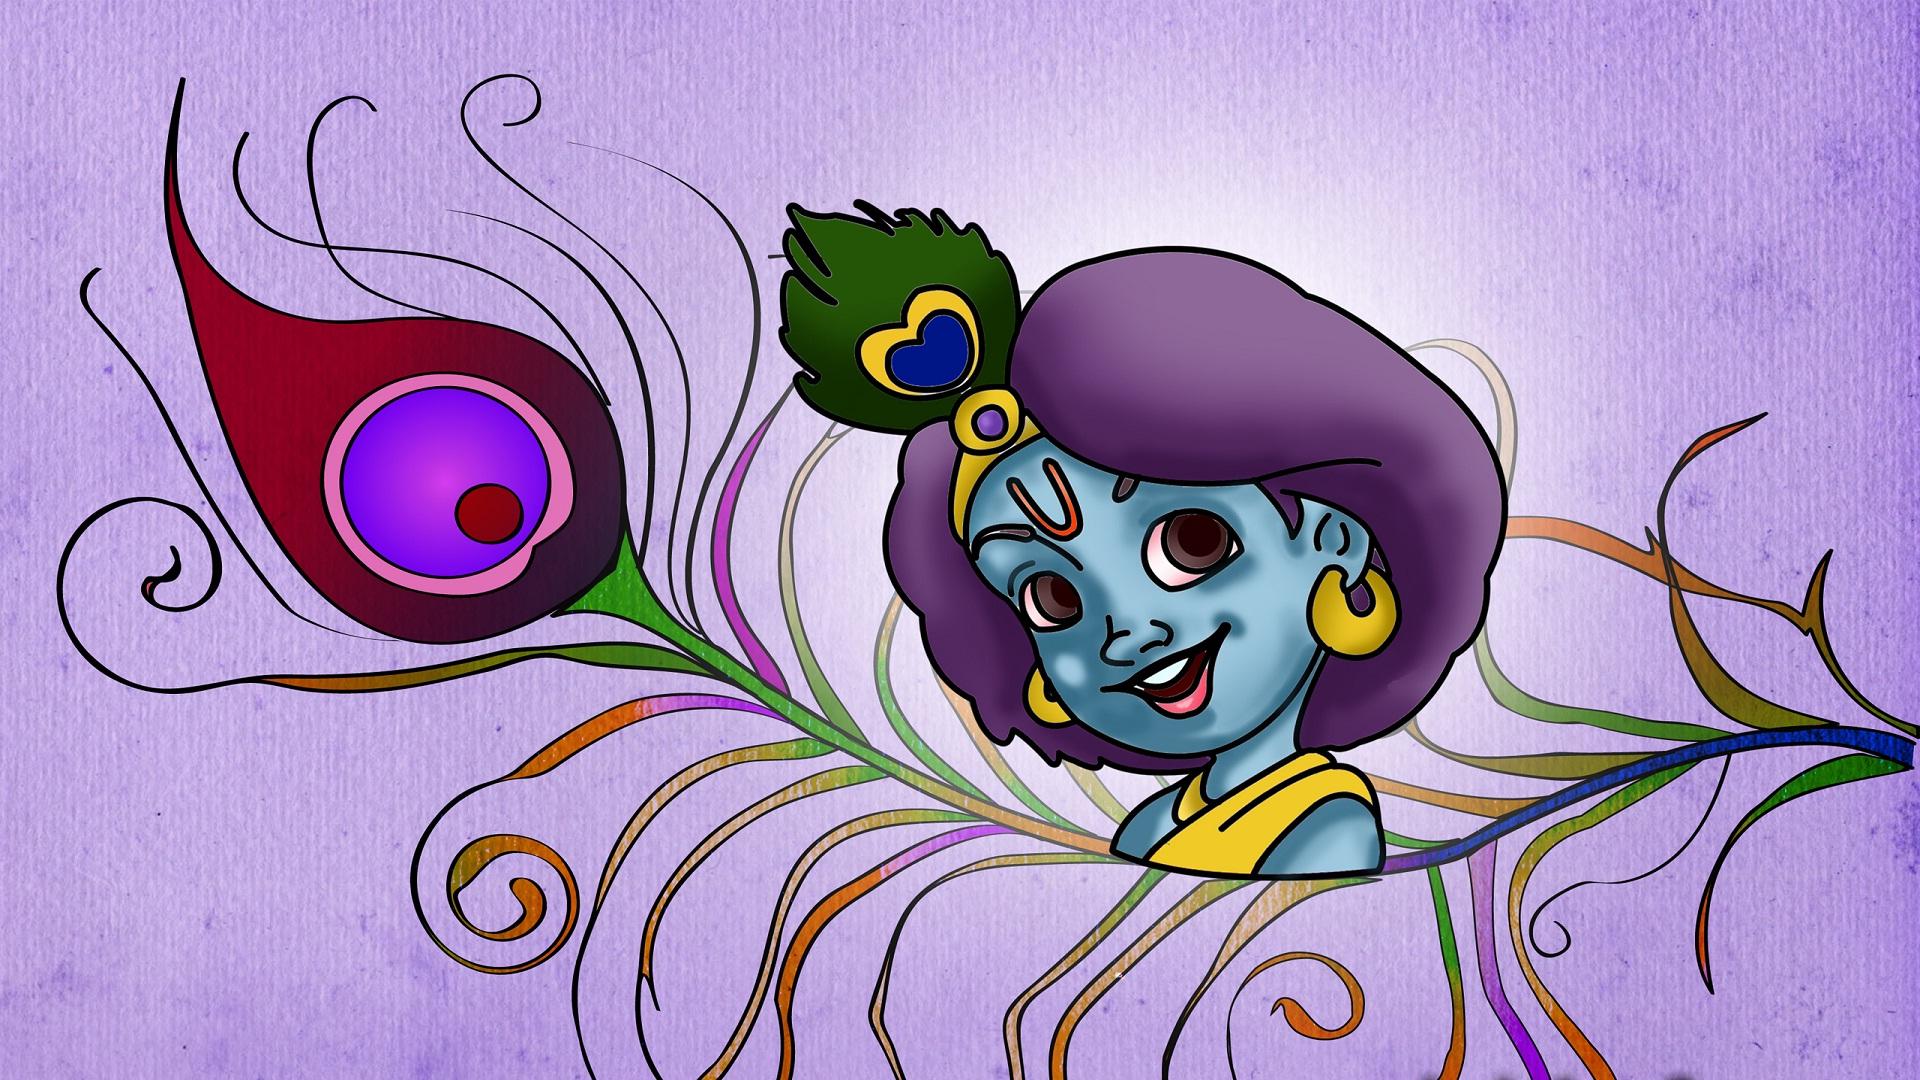 Bal Krishna Animation Wallpaper JKAHIR.COM